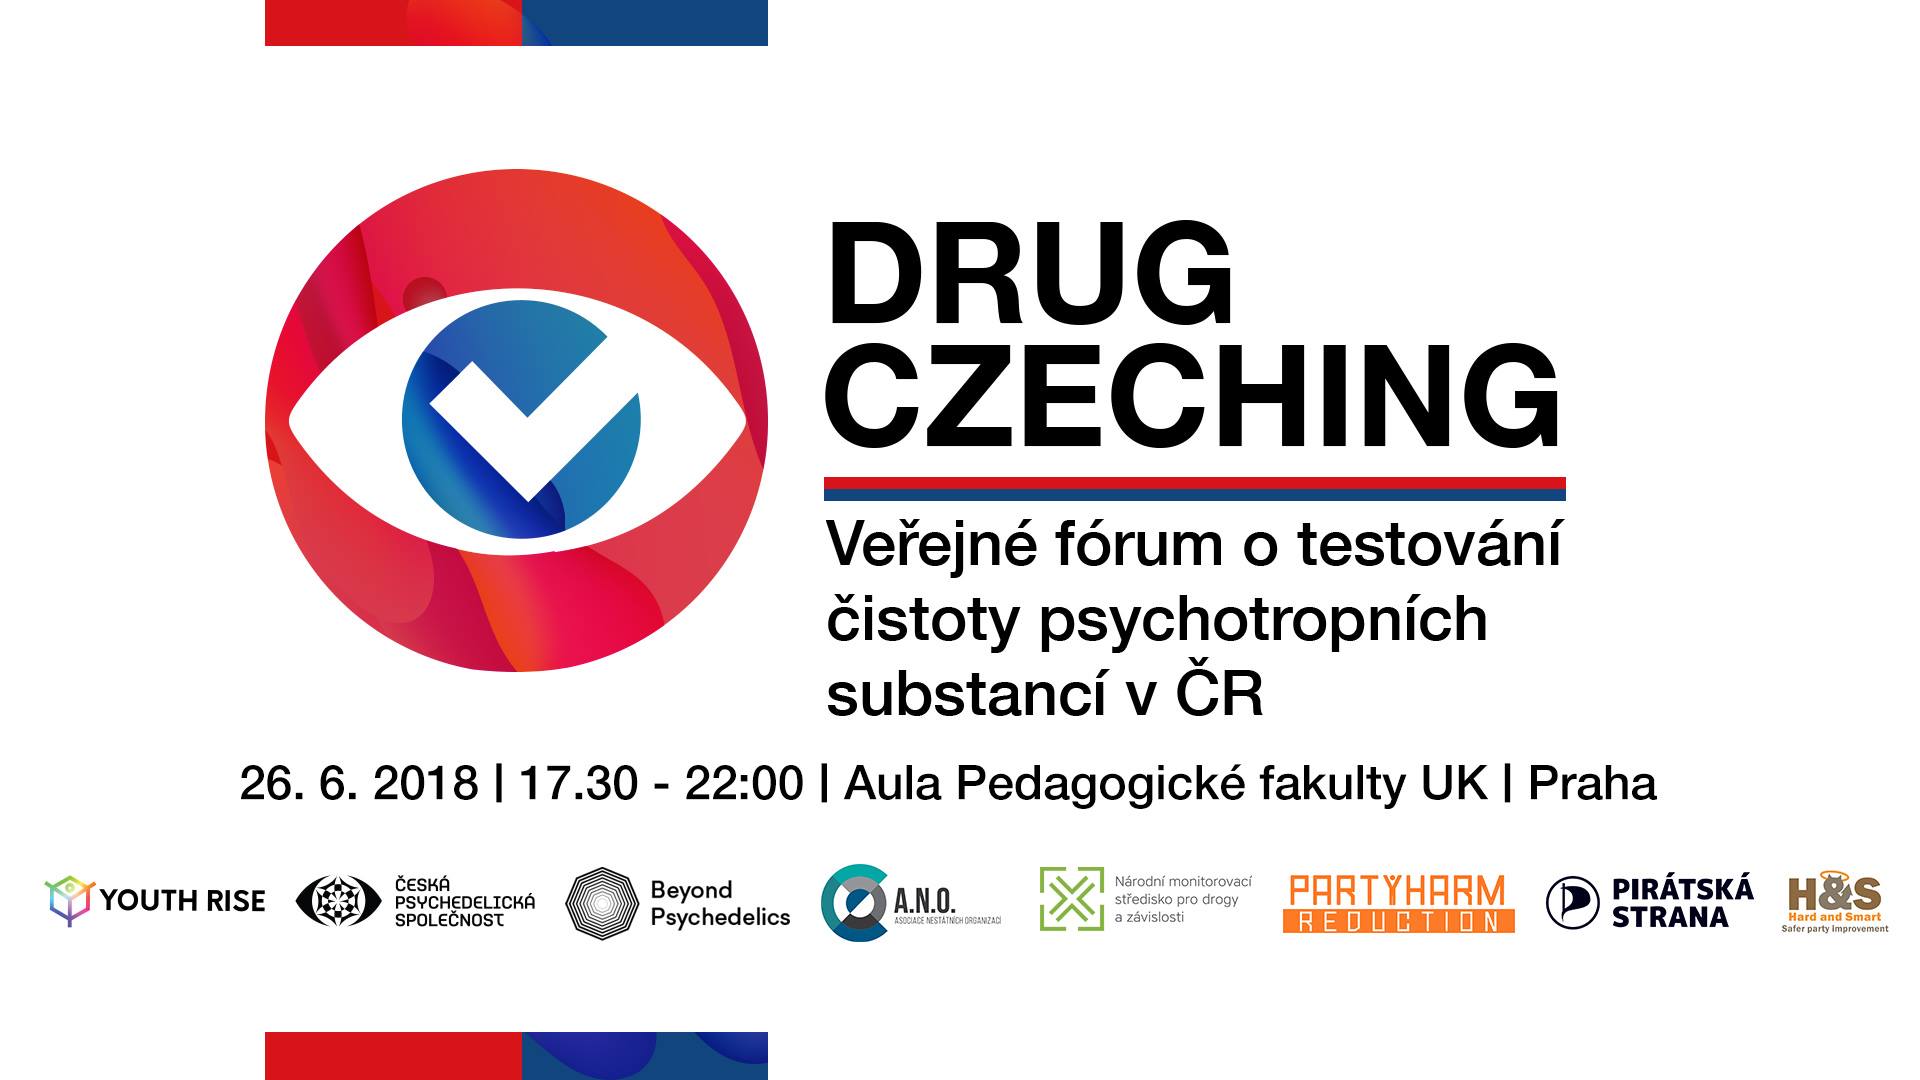 DRUG Czeching